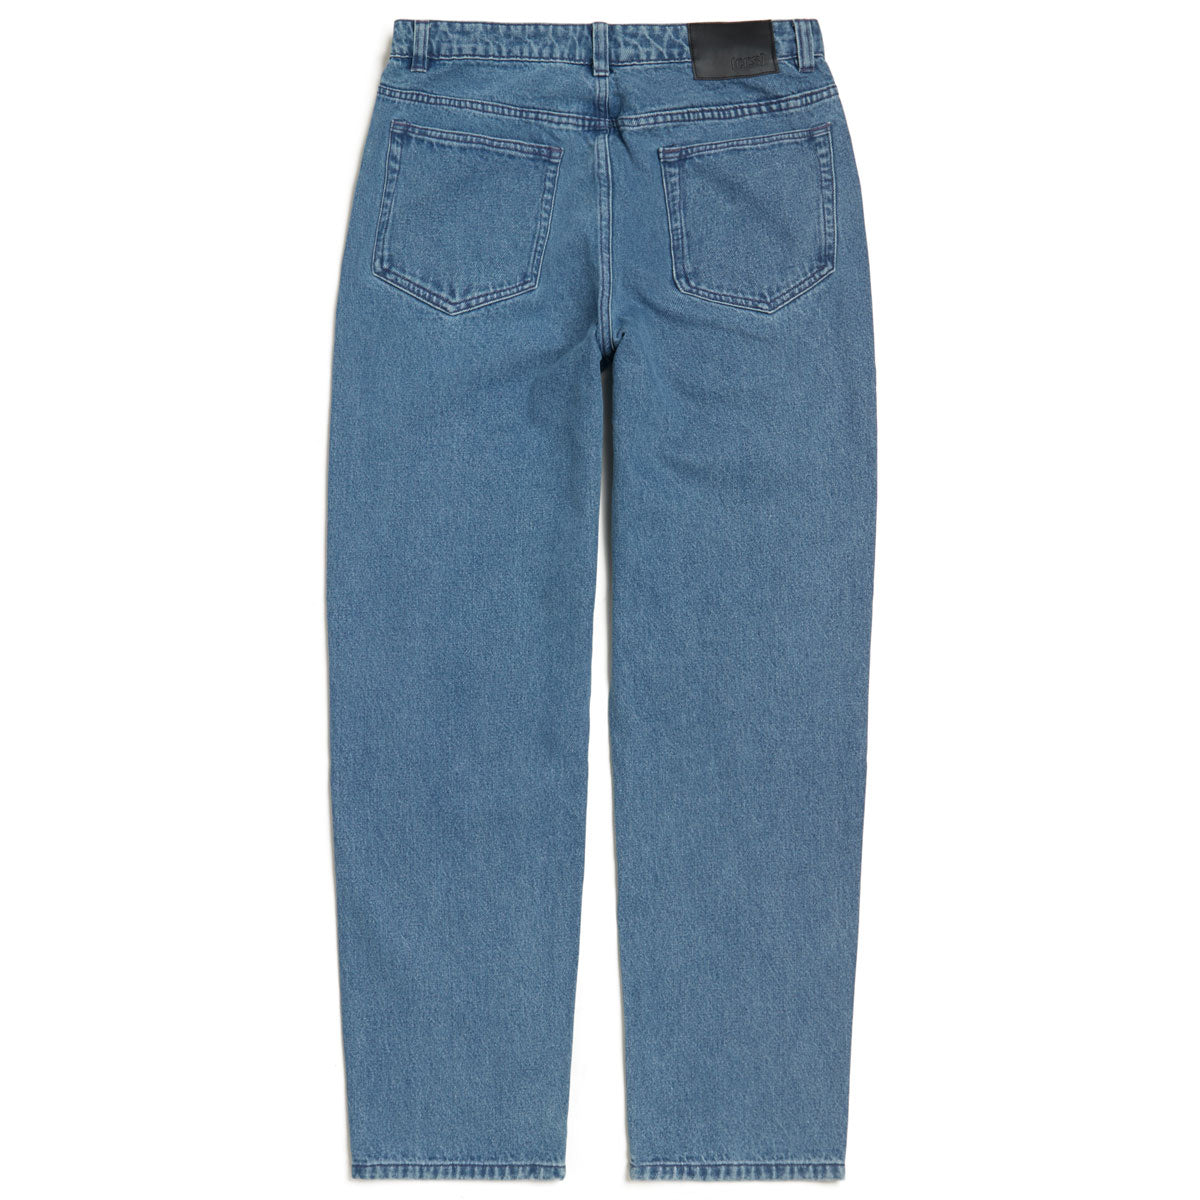 CCS Original Relaxed Taper Jeans - Medium Wash image 4